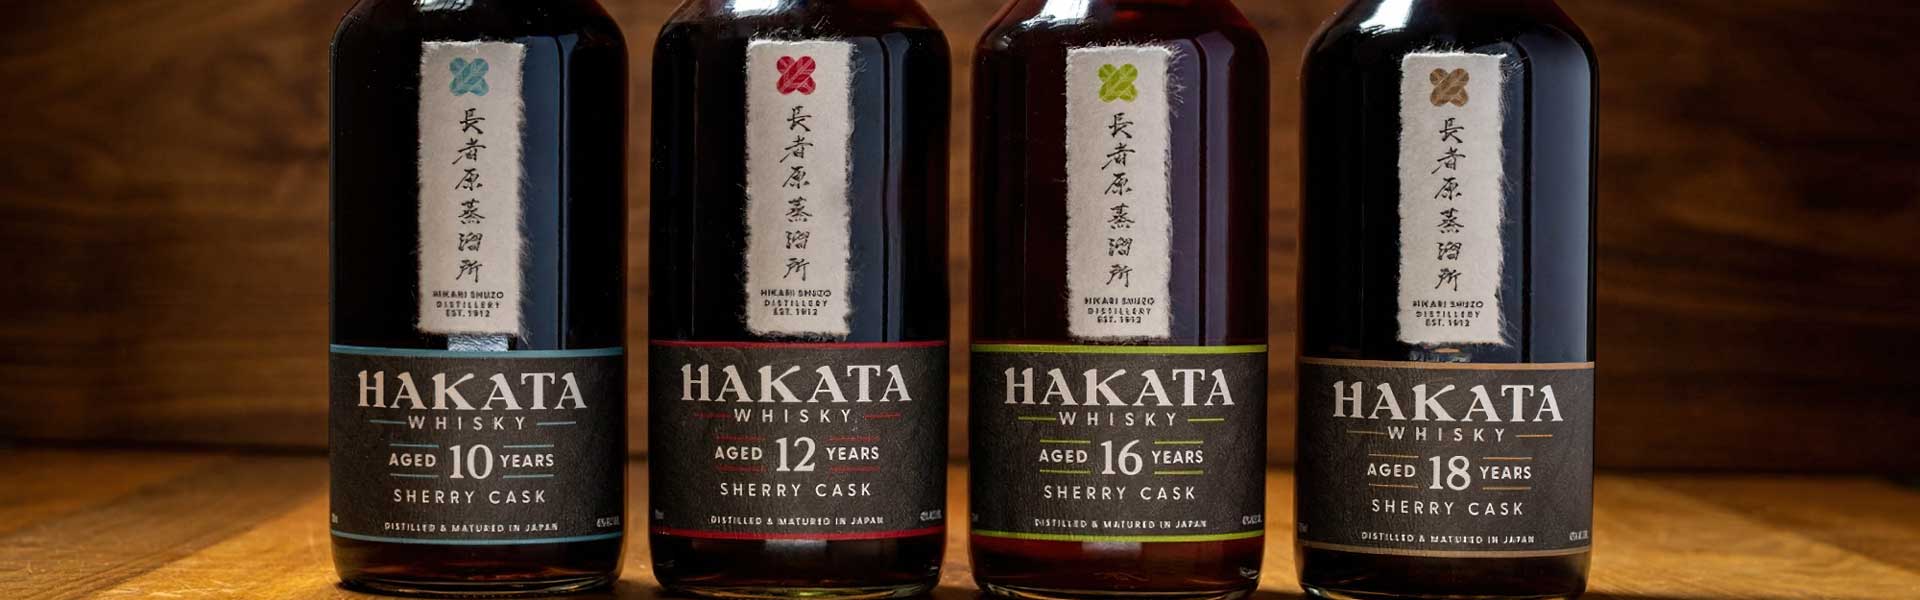 Robb Report: Hakata, ein Whisky mit viel umami